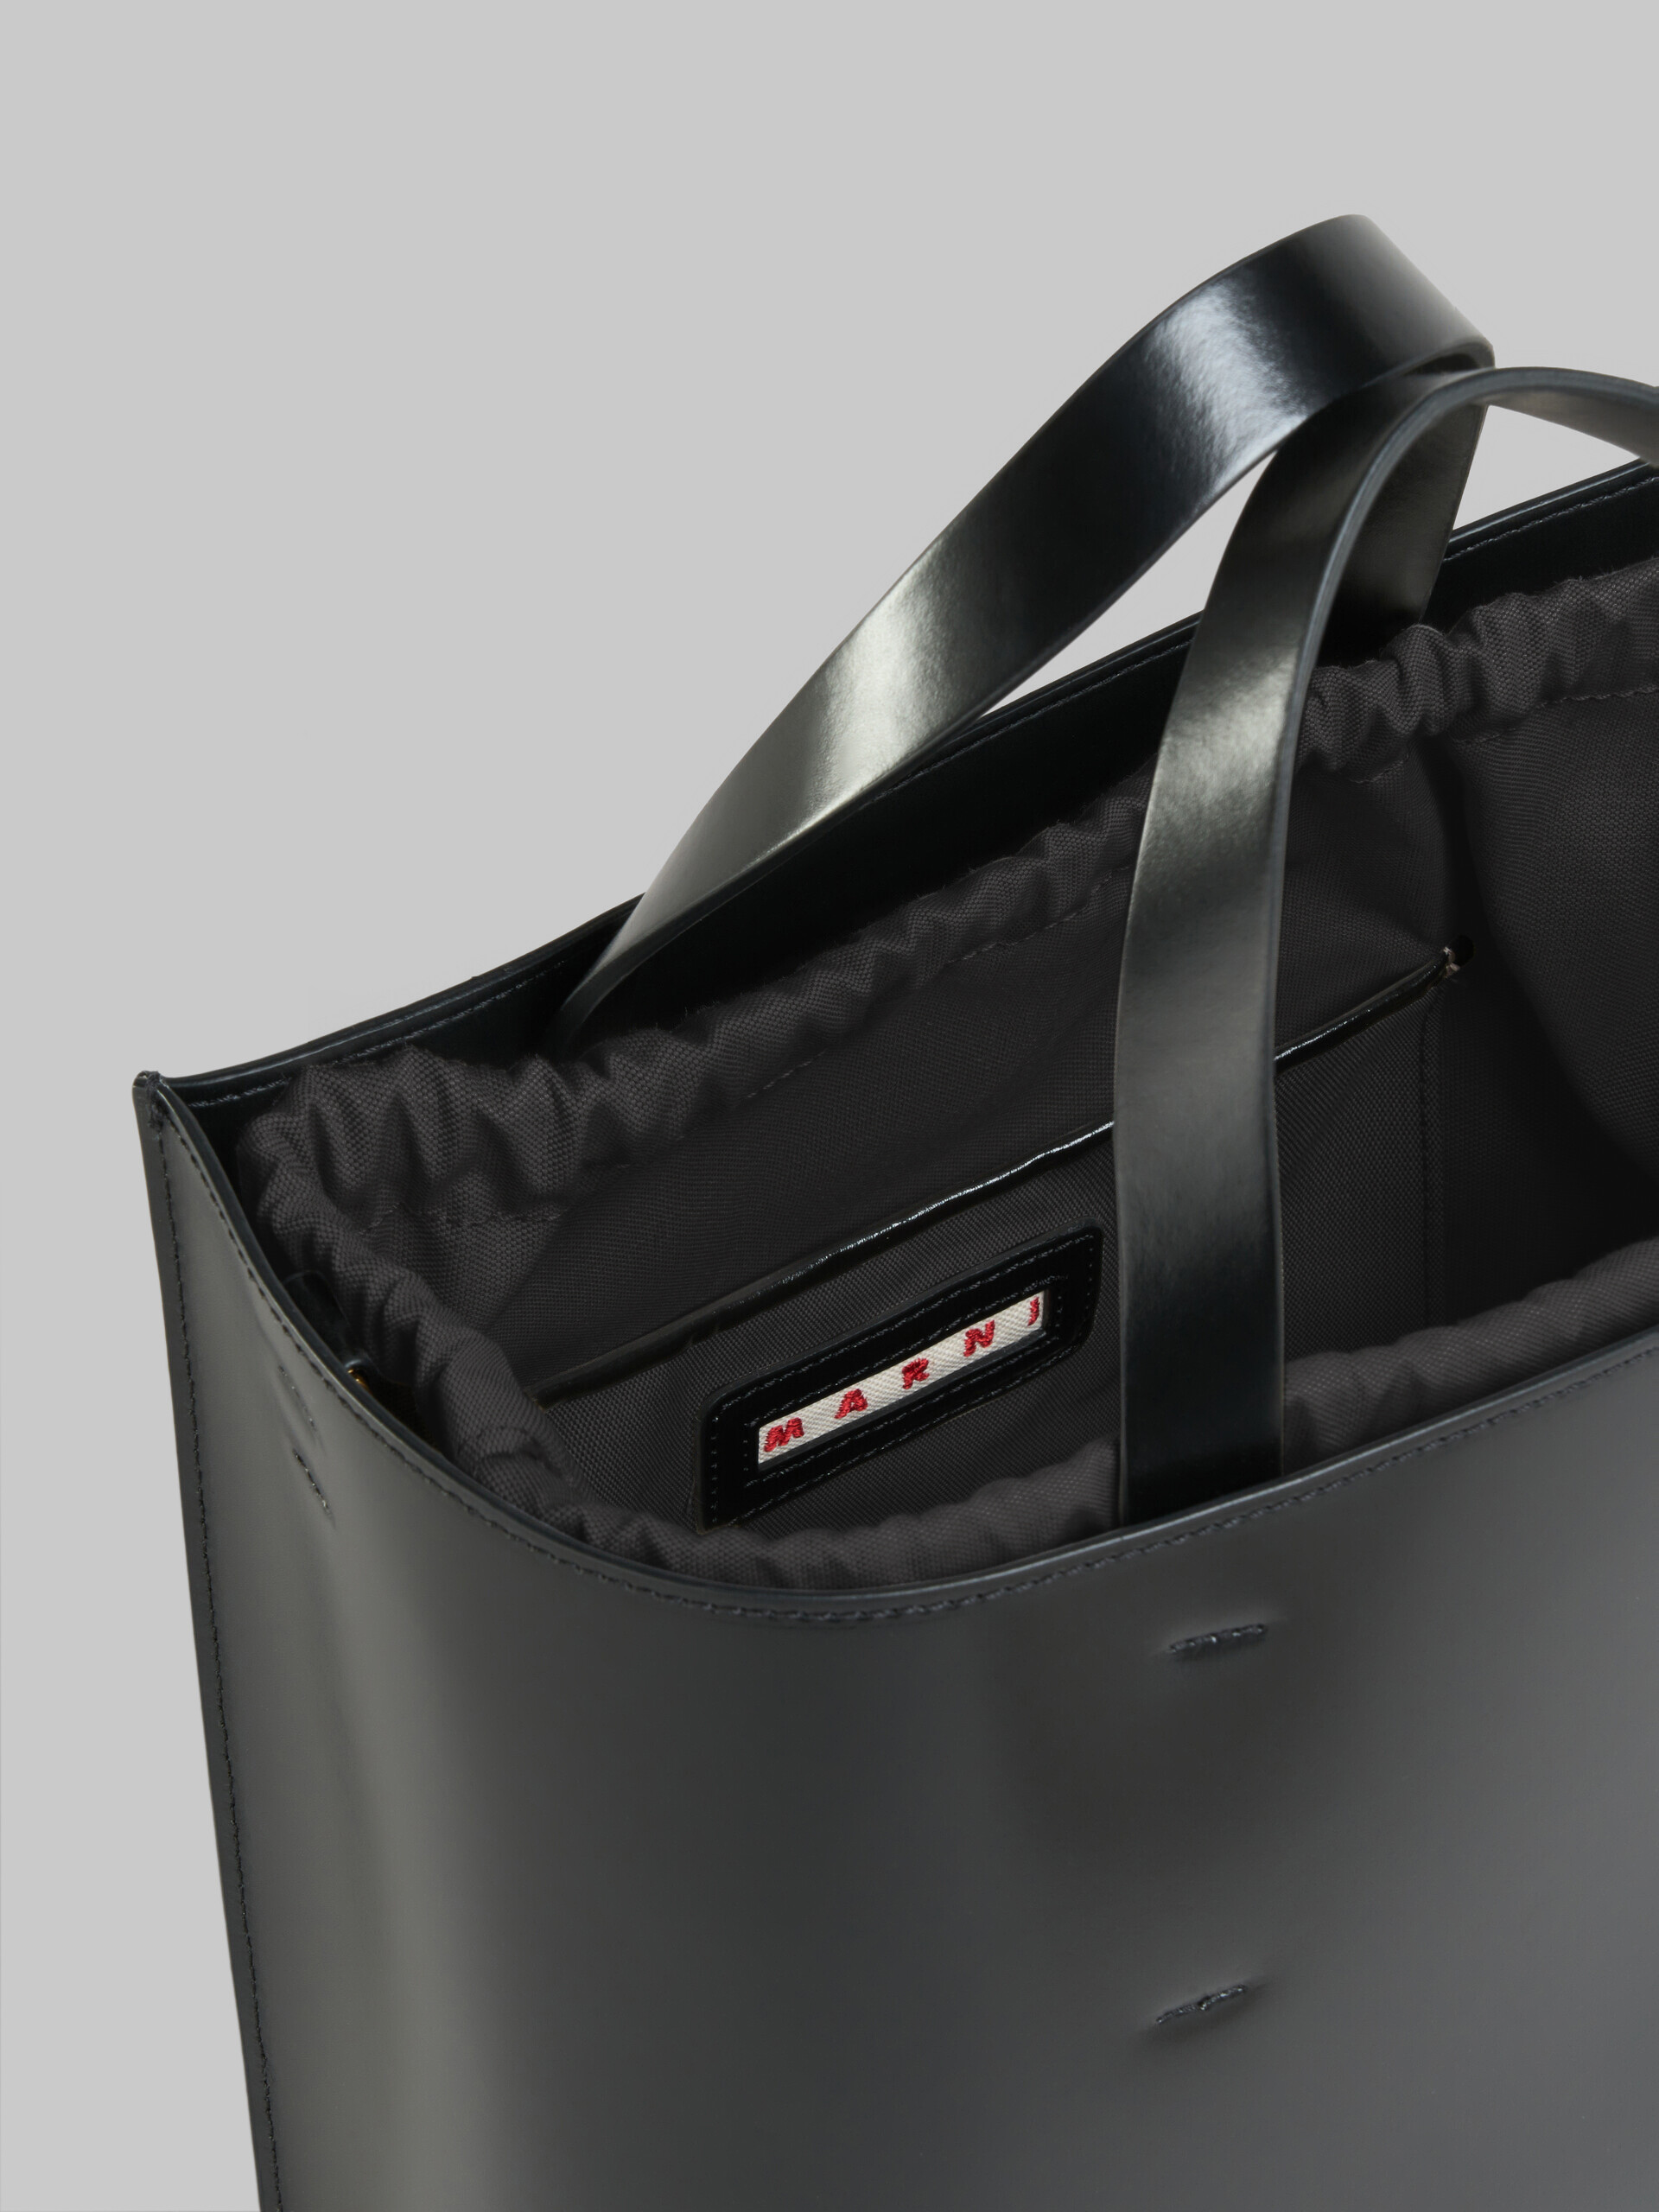 Marni Mini Bag in Black